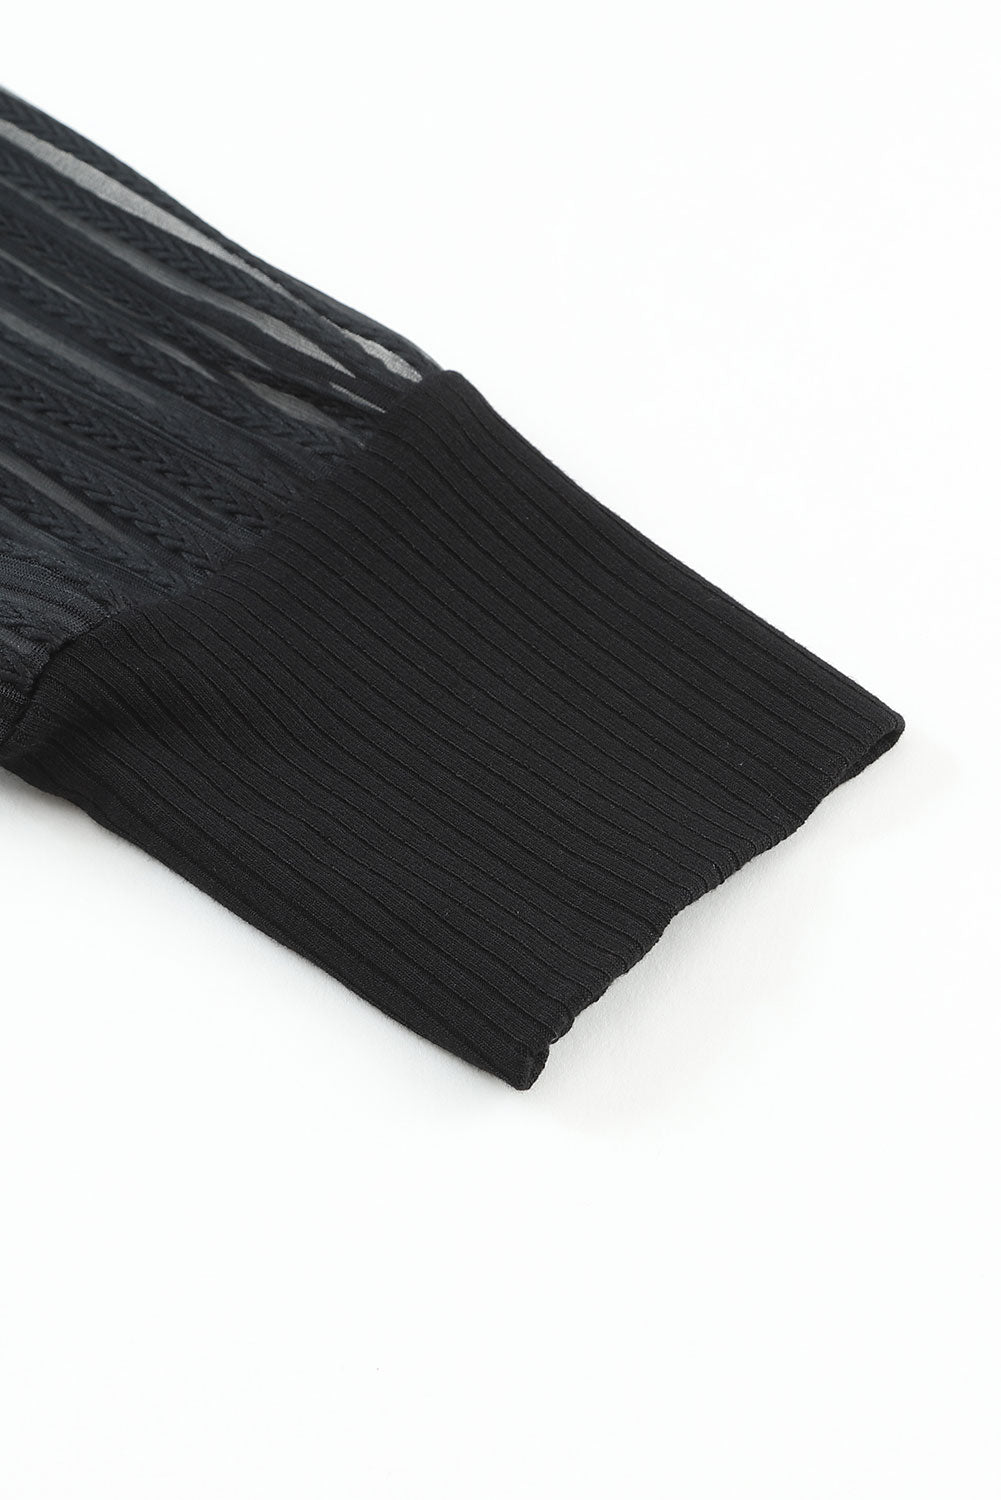 Black Striped Mesh Long Sleeve Crewneck Ribbed Top MTS0178